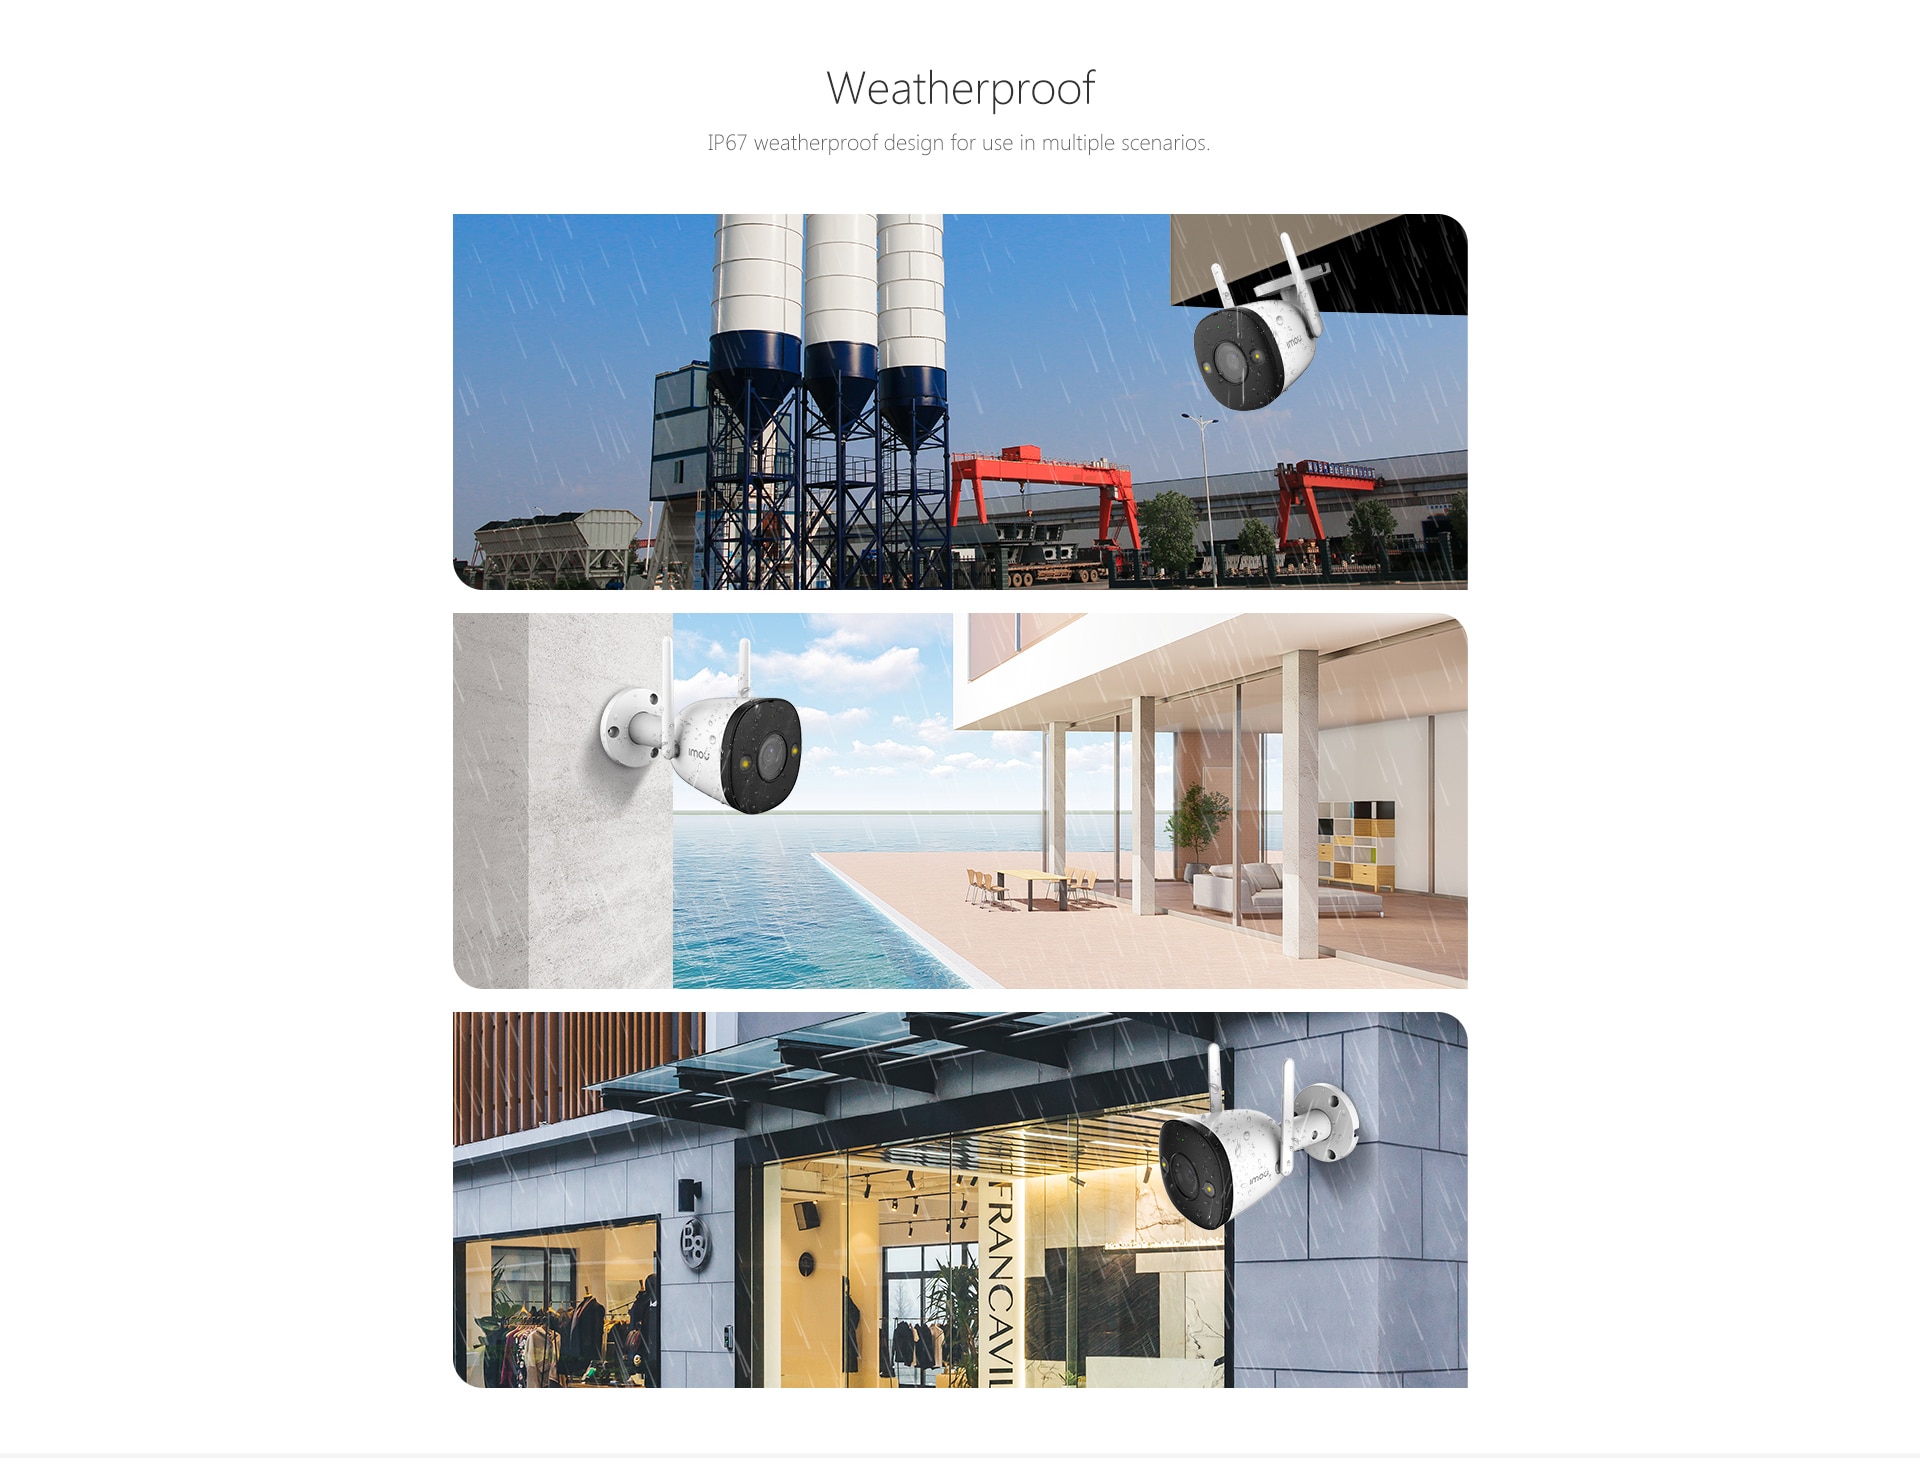 Color night vision wifi security cameras Dahua Imou 2E 4MP for outdoor € 94,38